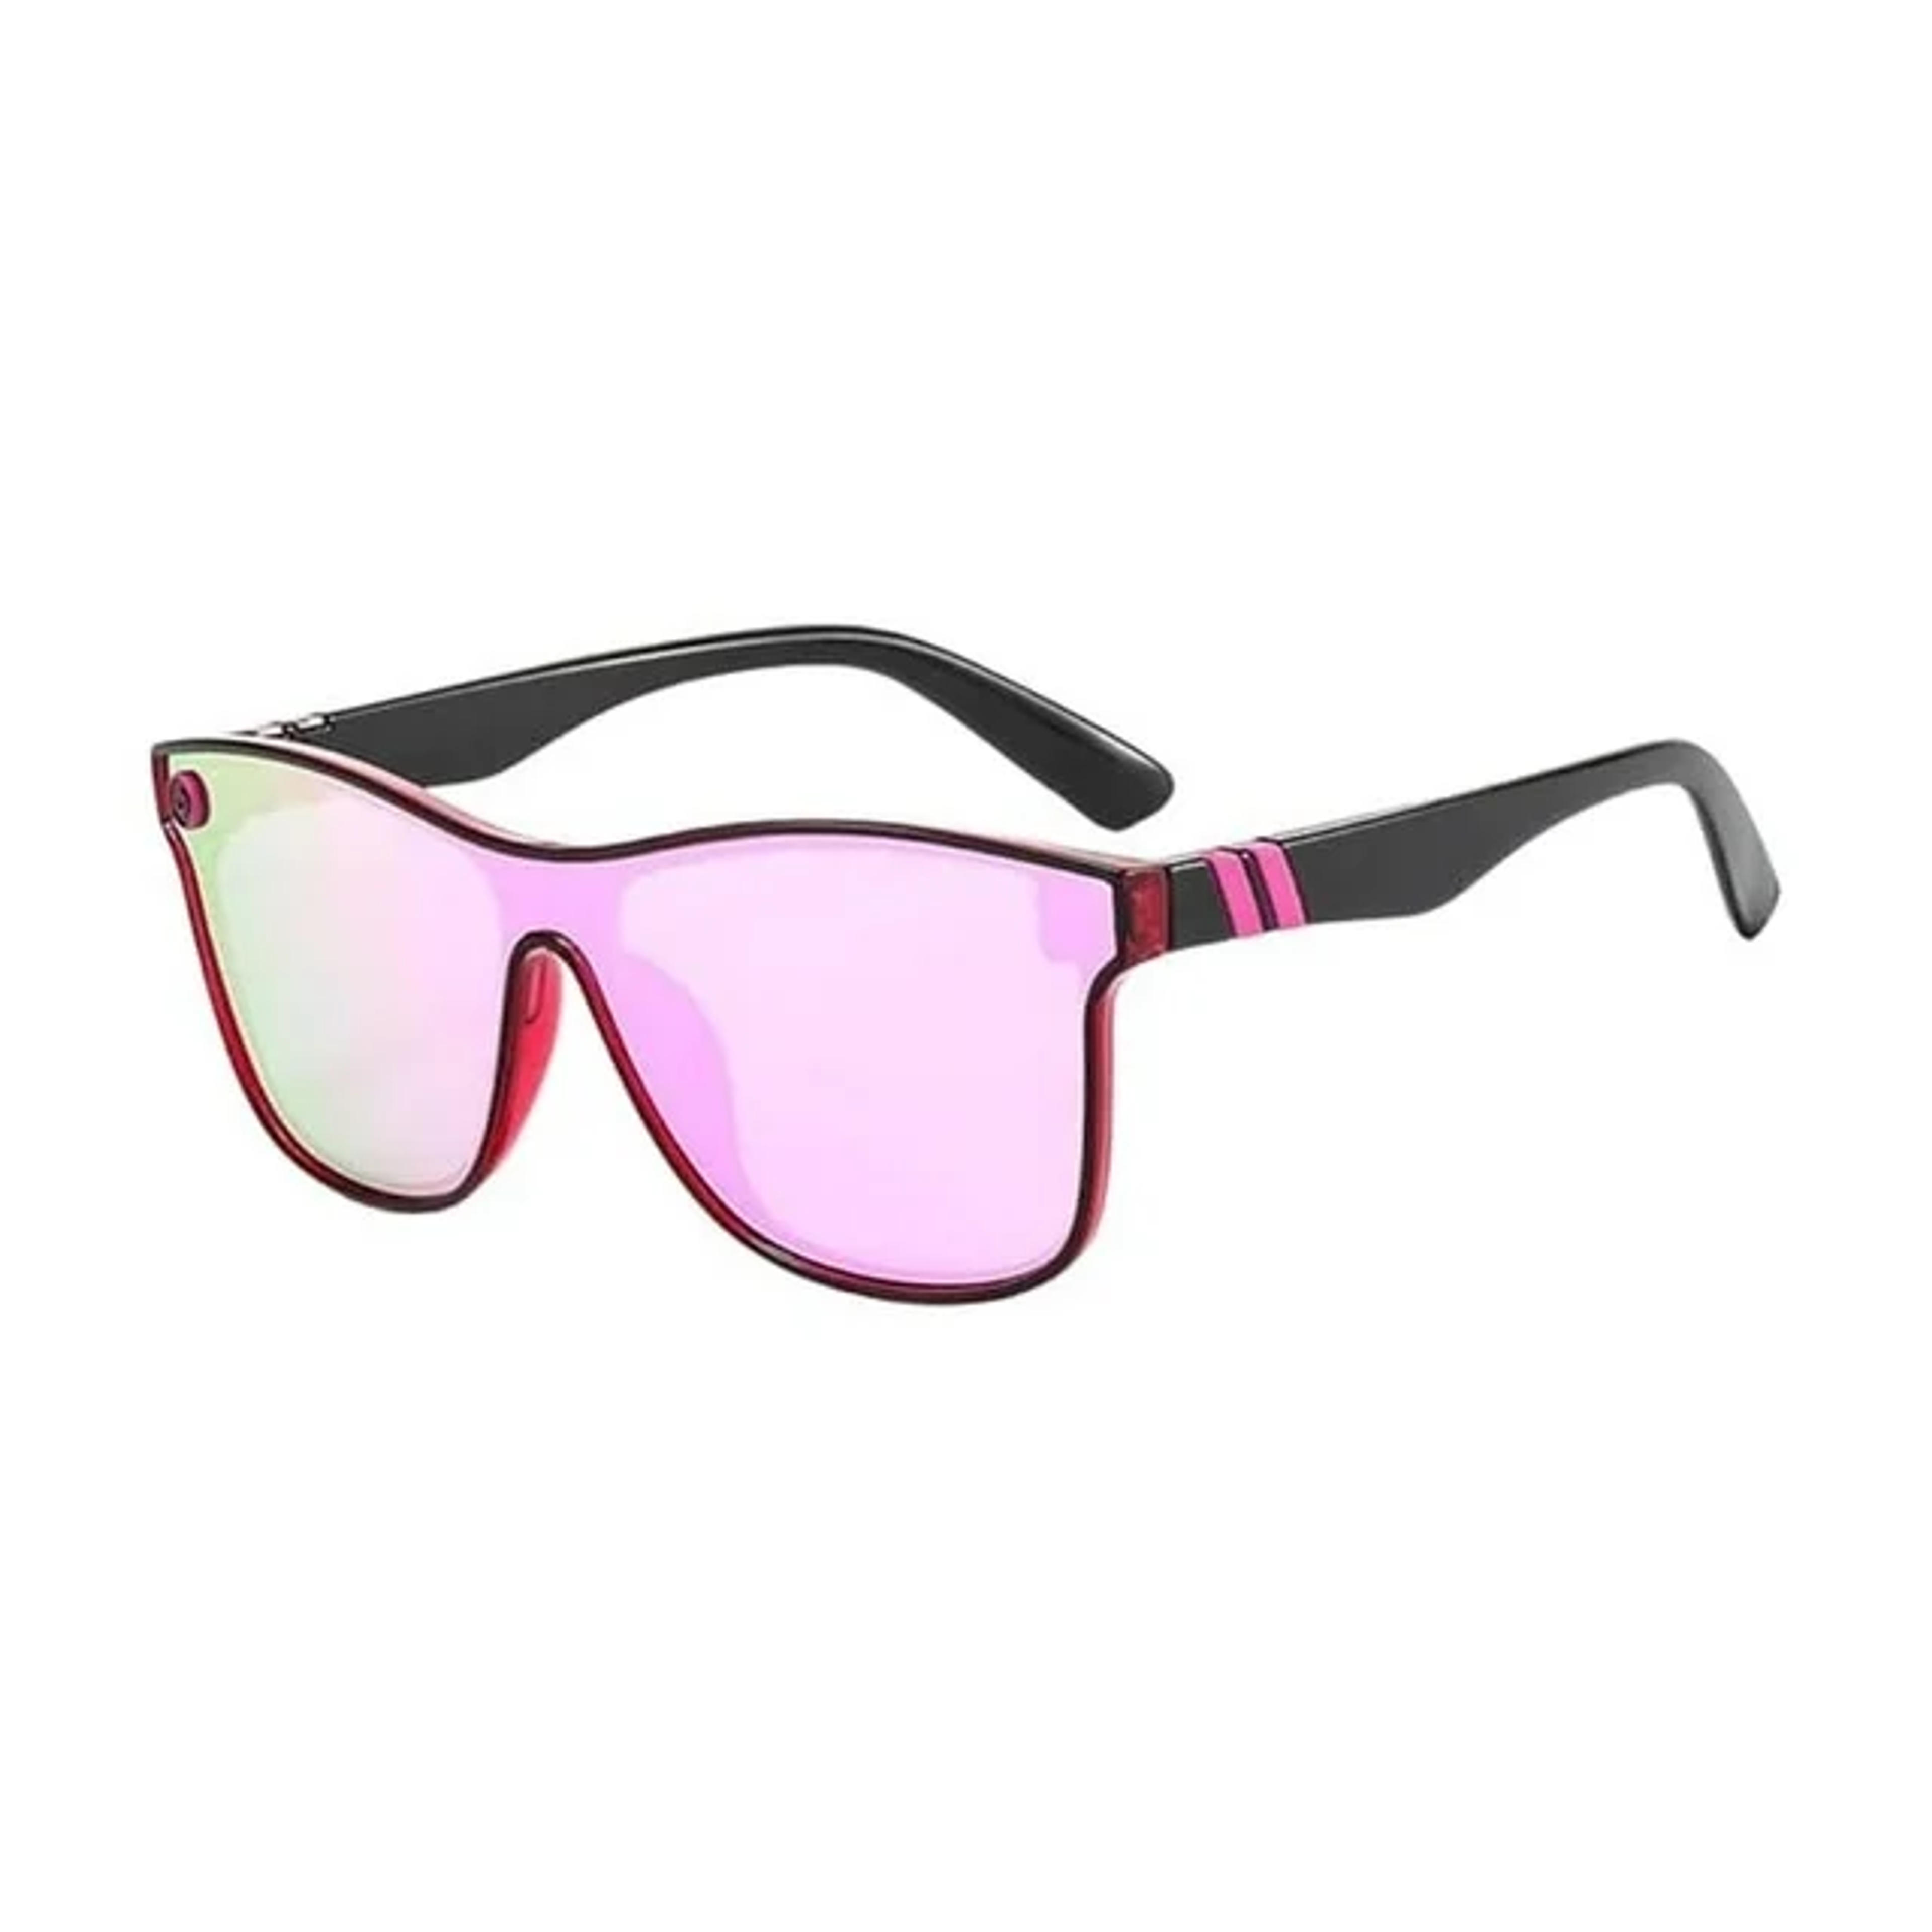 "The Prime Time" Trendy Sport Sunglasses with One Piece Lens - Blackberry - Walmart.com